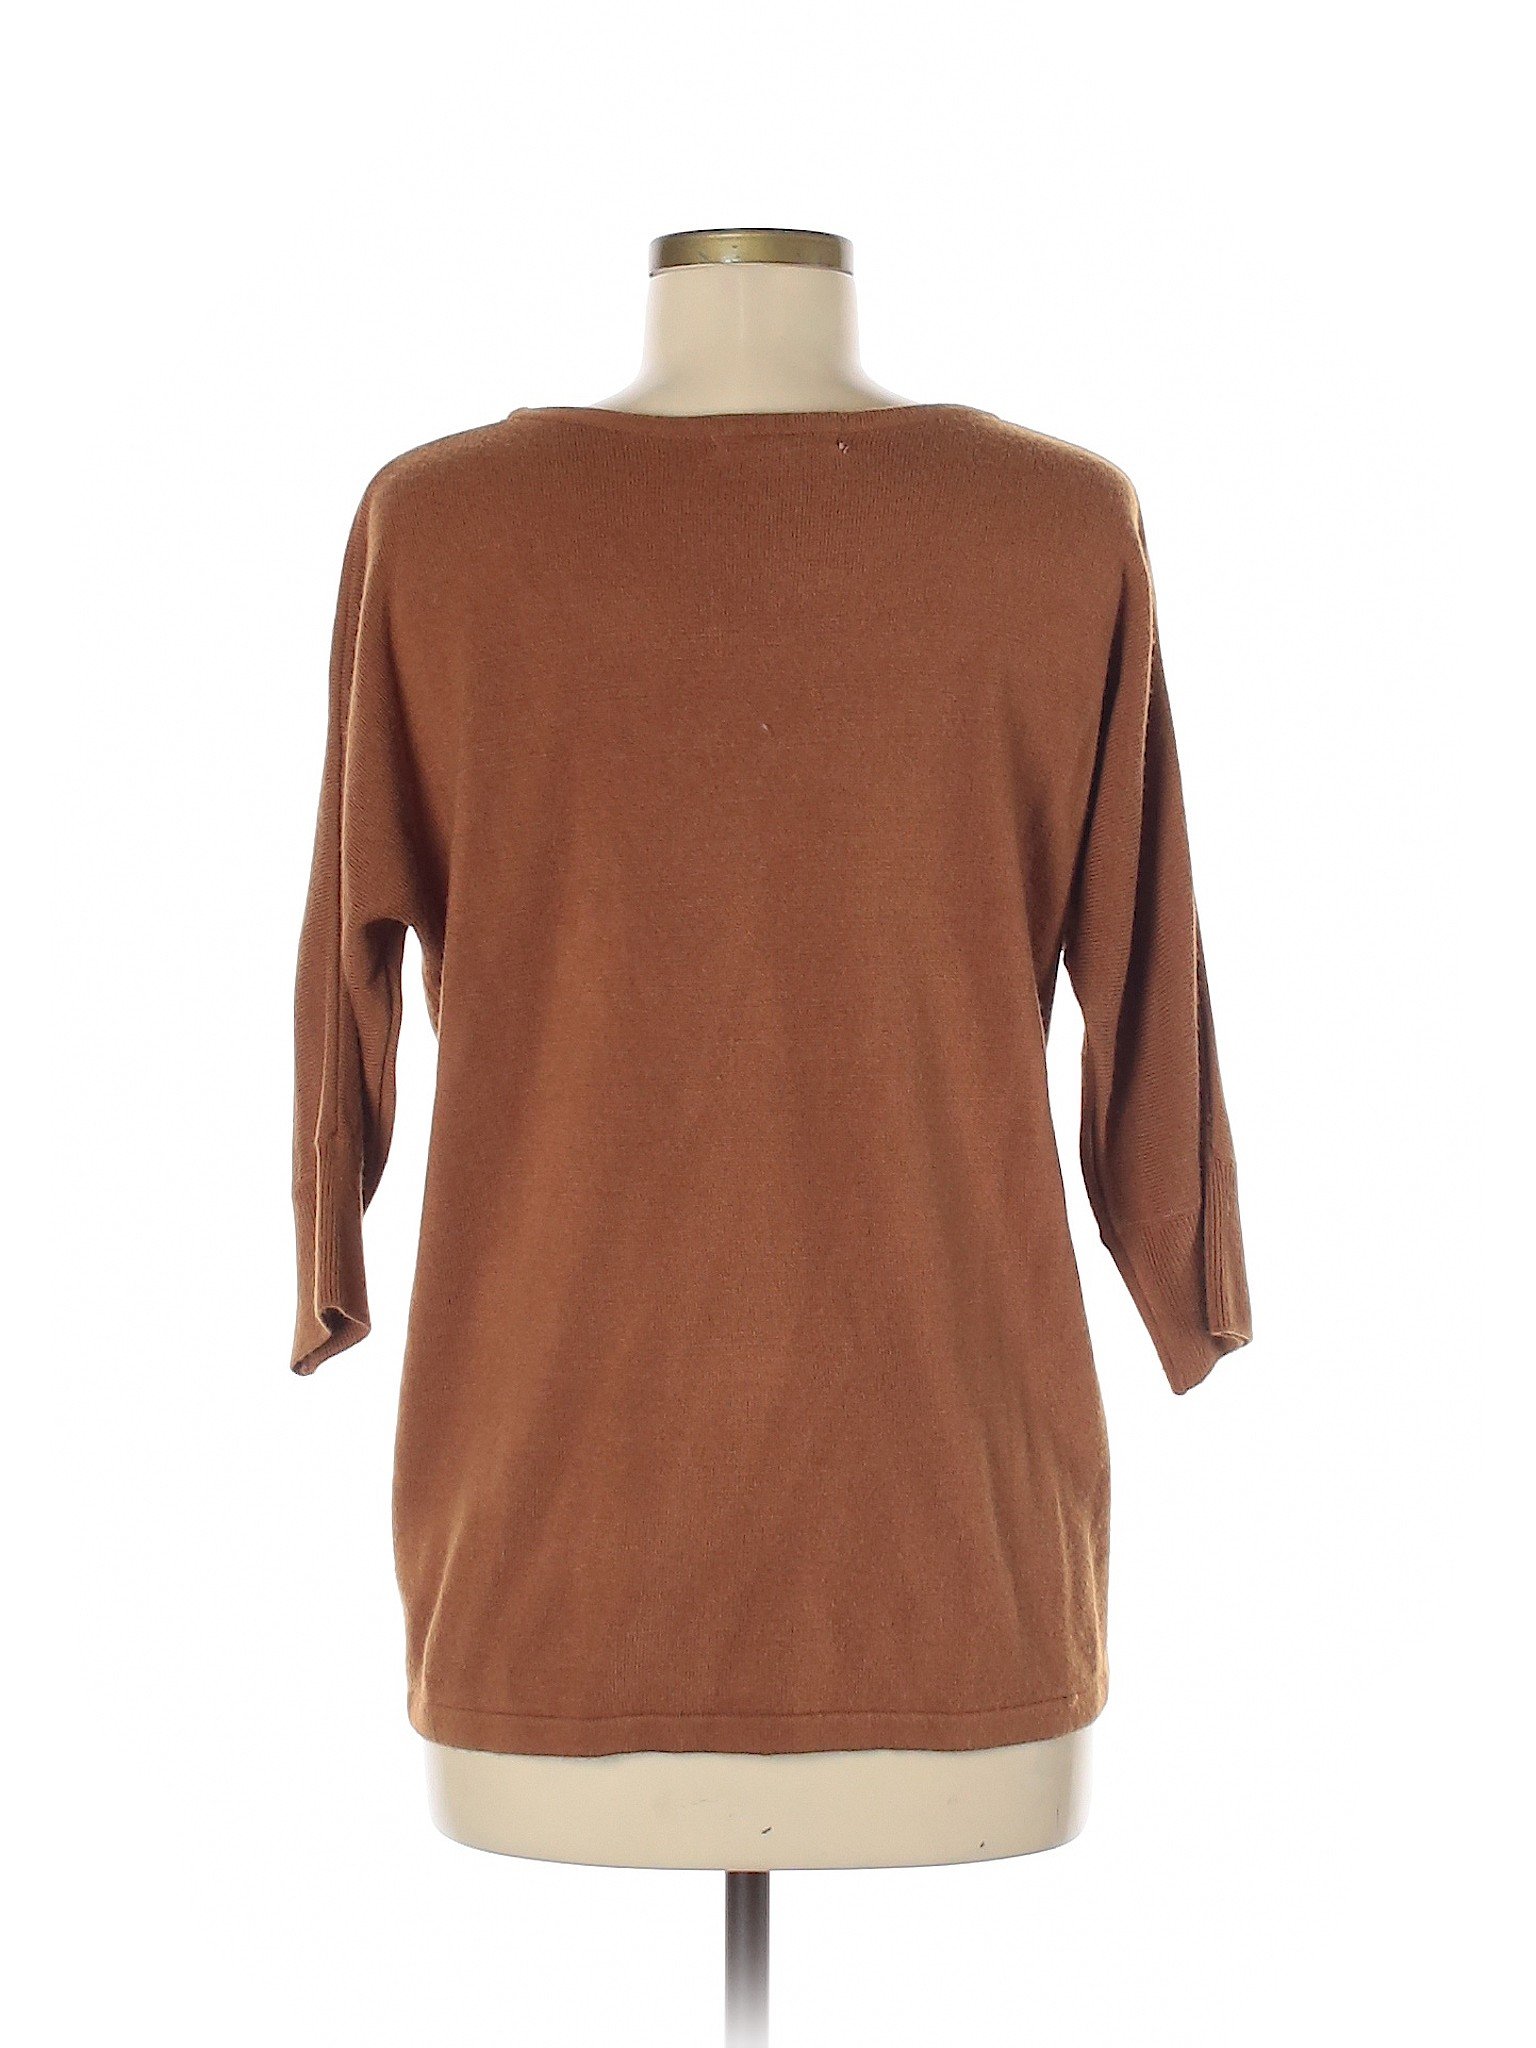 Forever Women Brown Pullover Sweater M | eBay